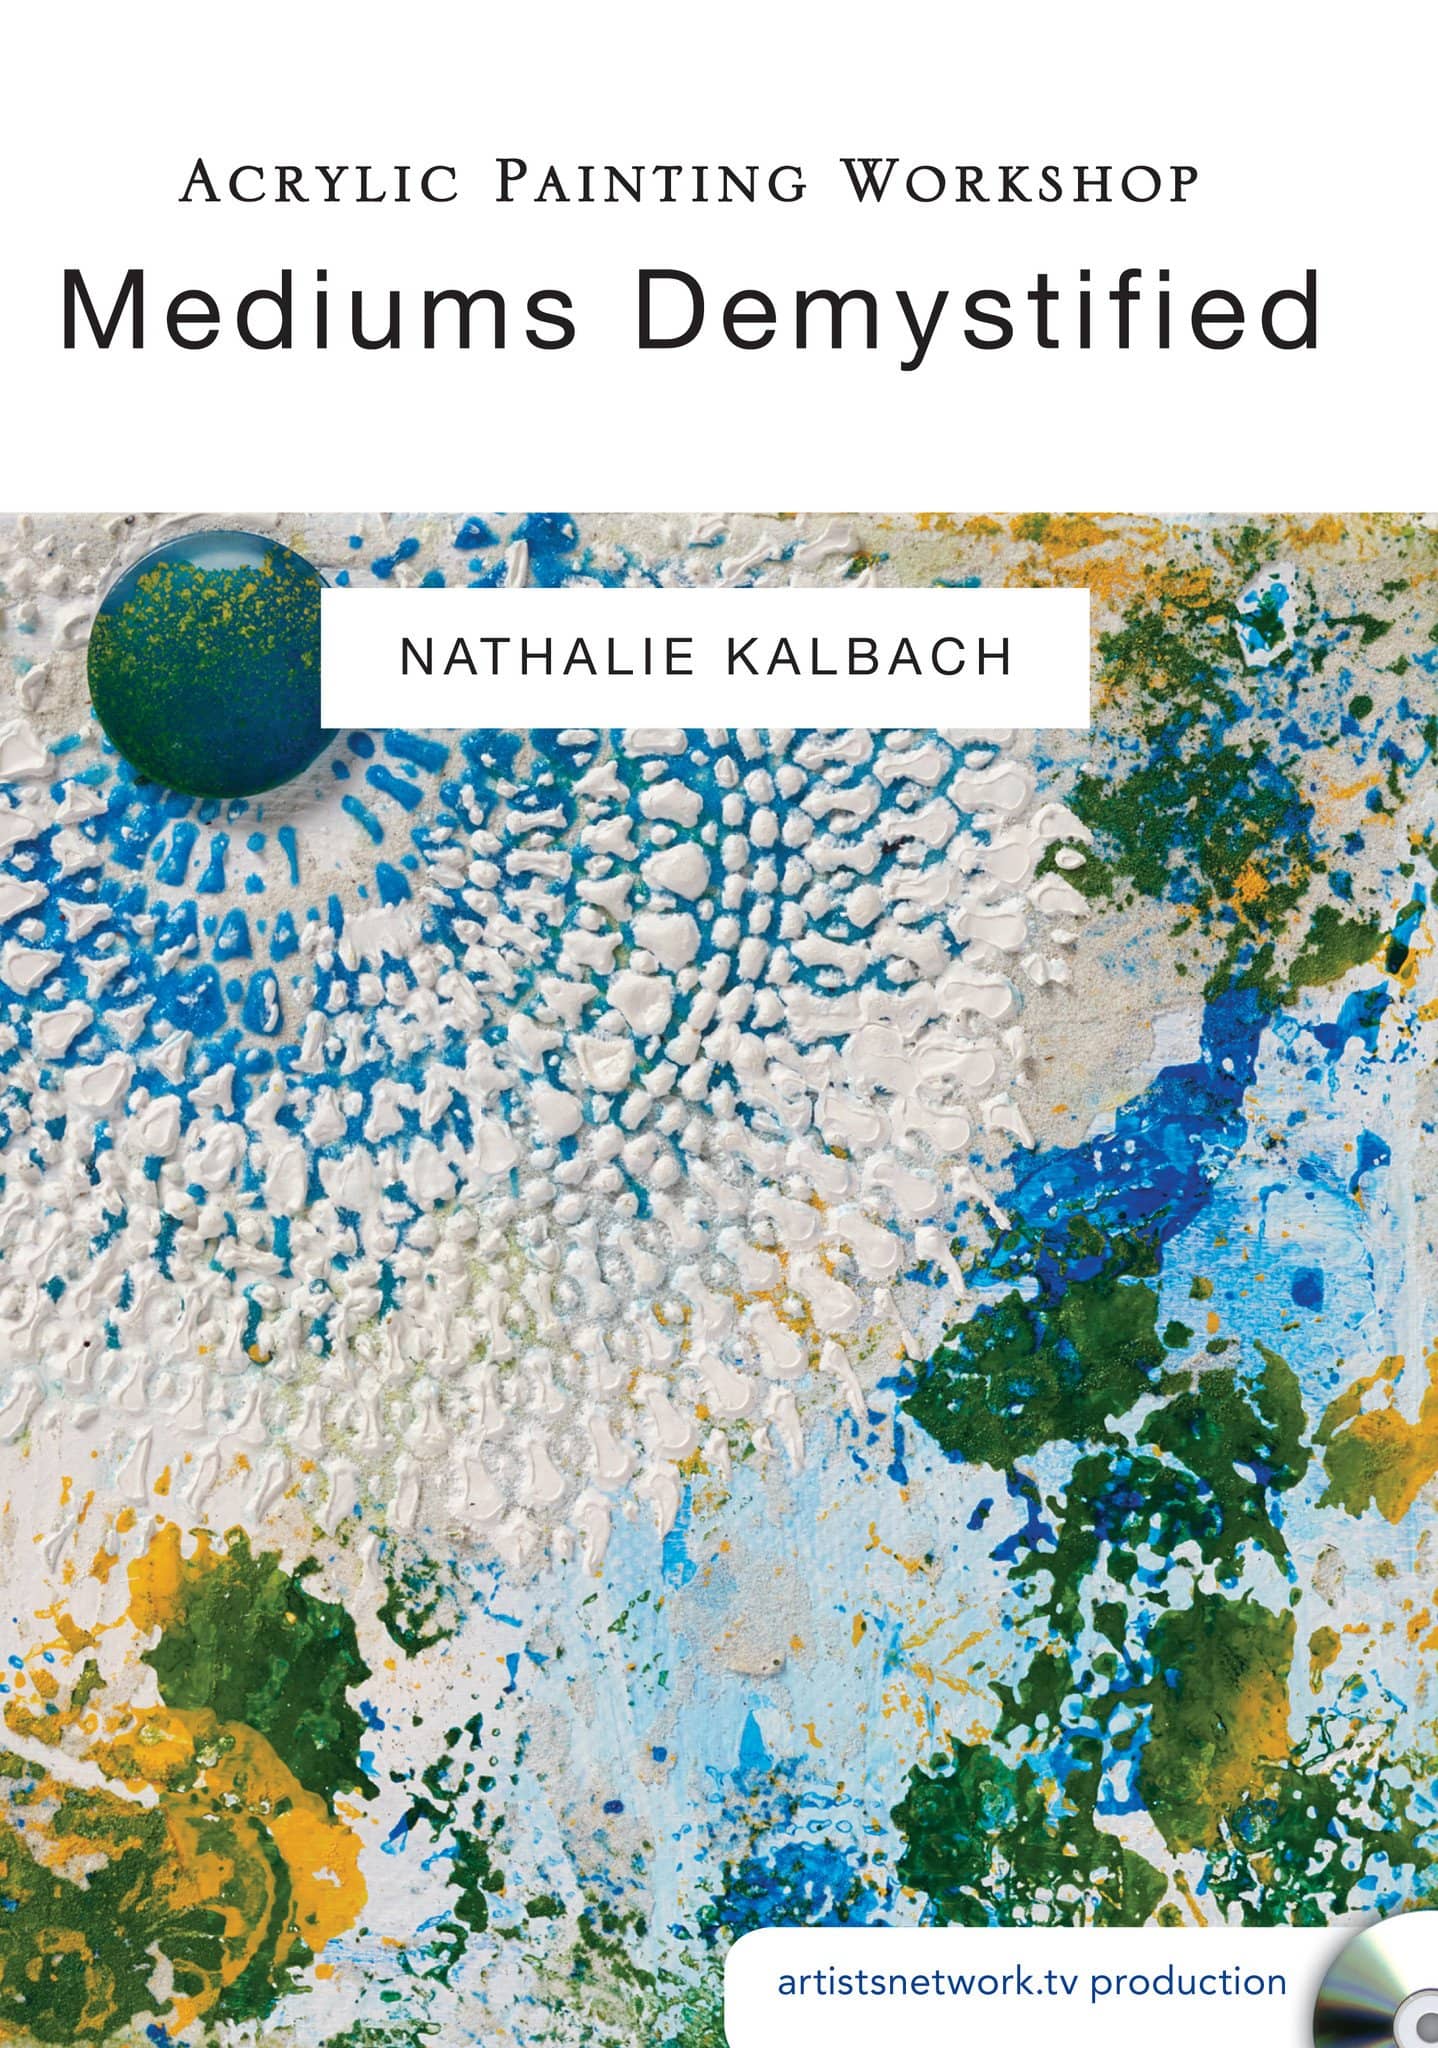 Nathalie Kalbach: Acrylic Painting Workshop - Mediums Demystified